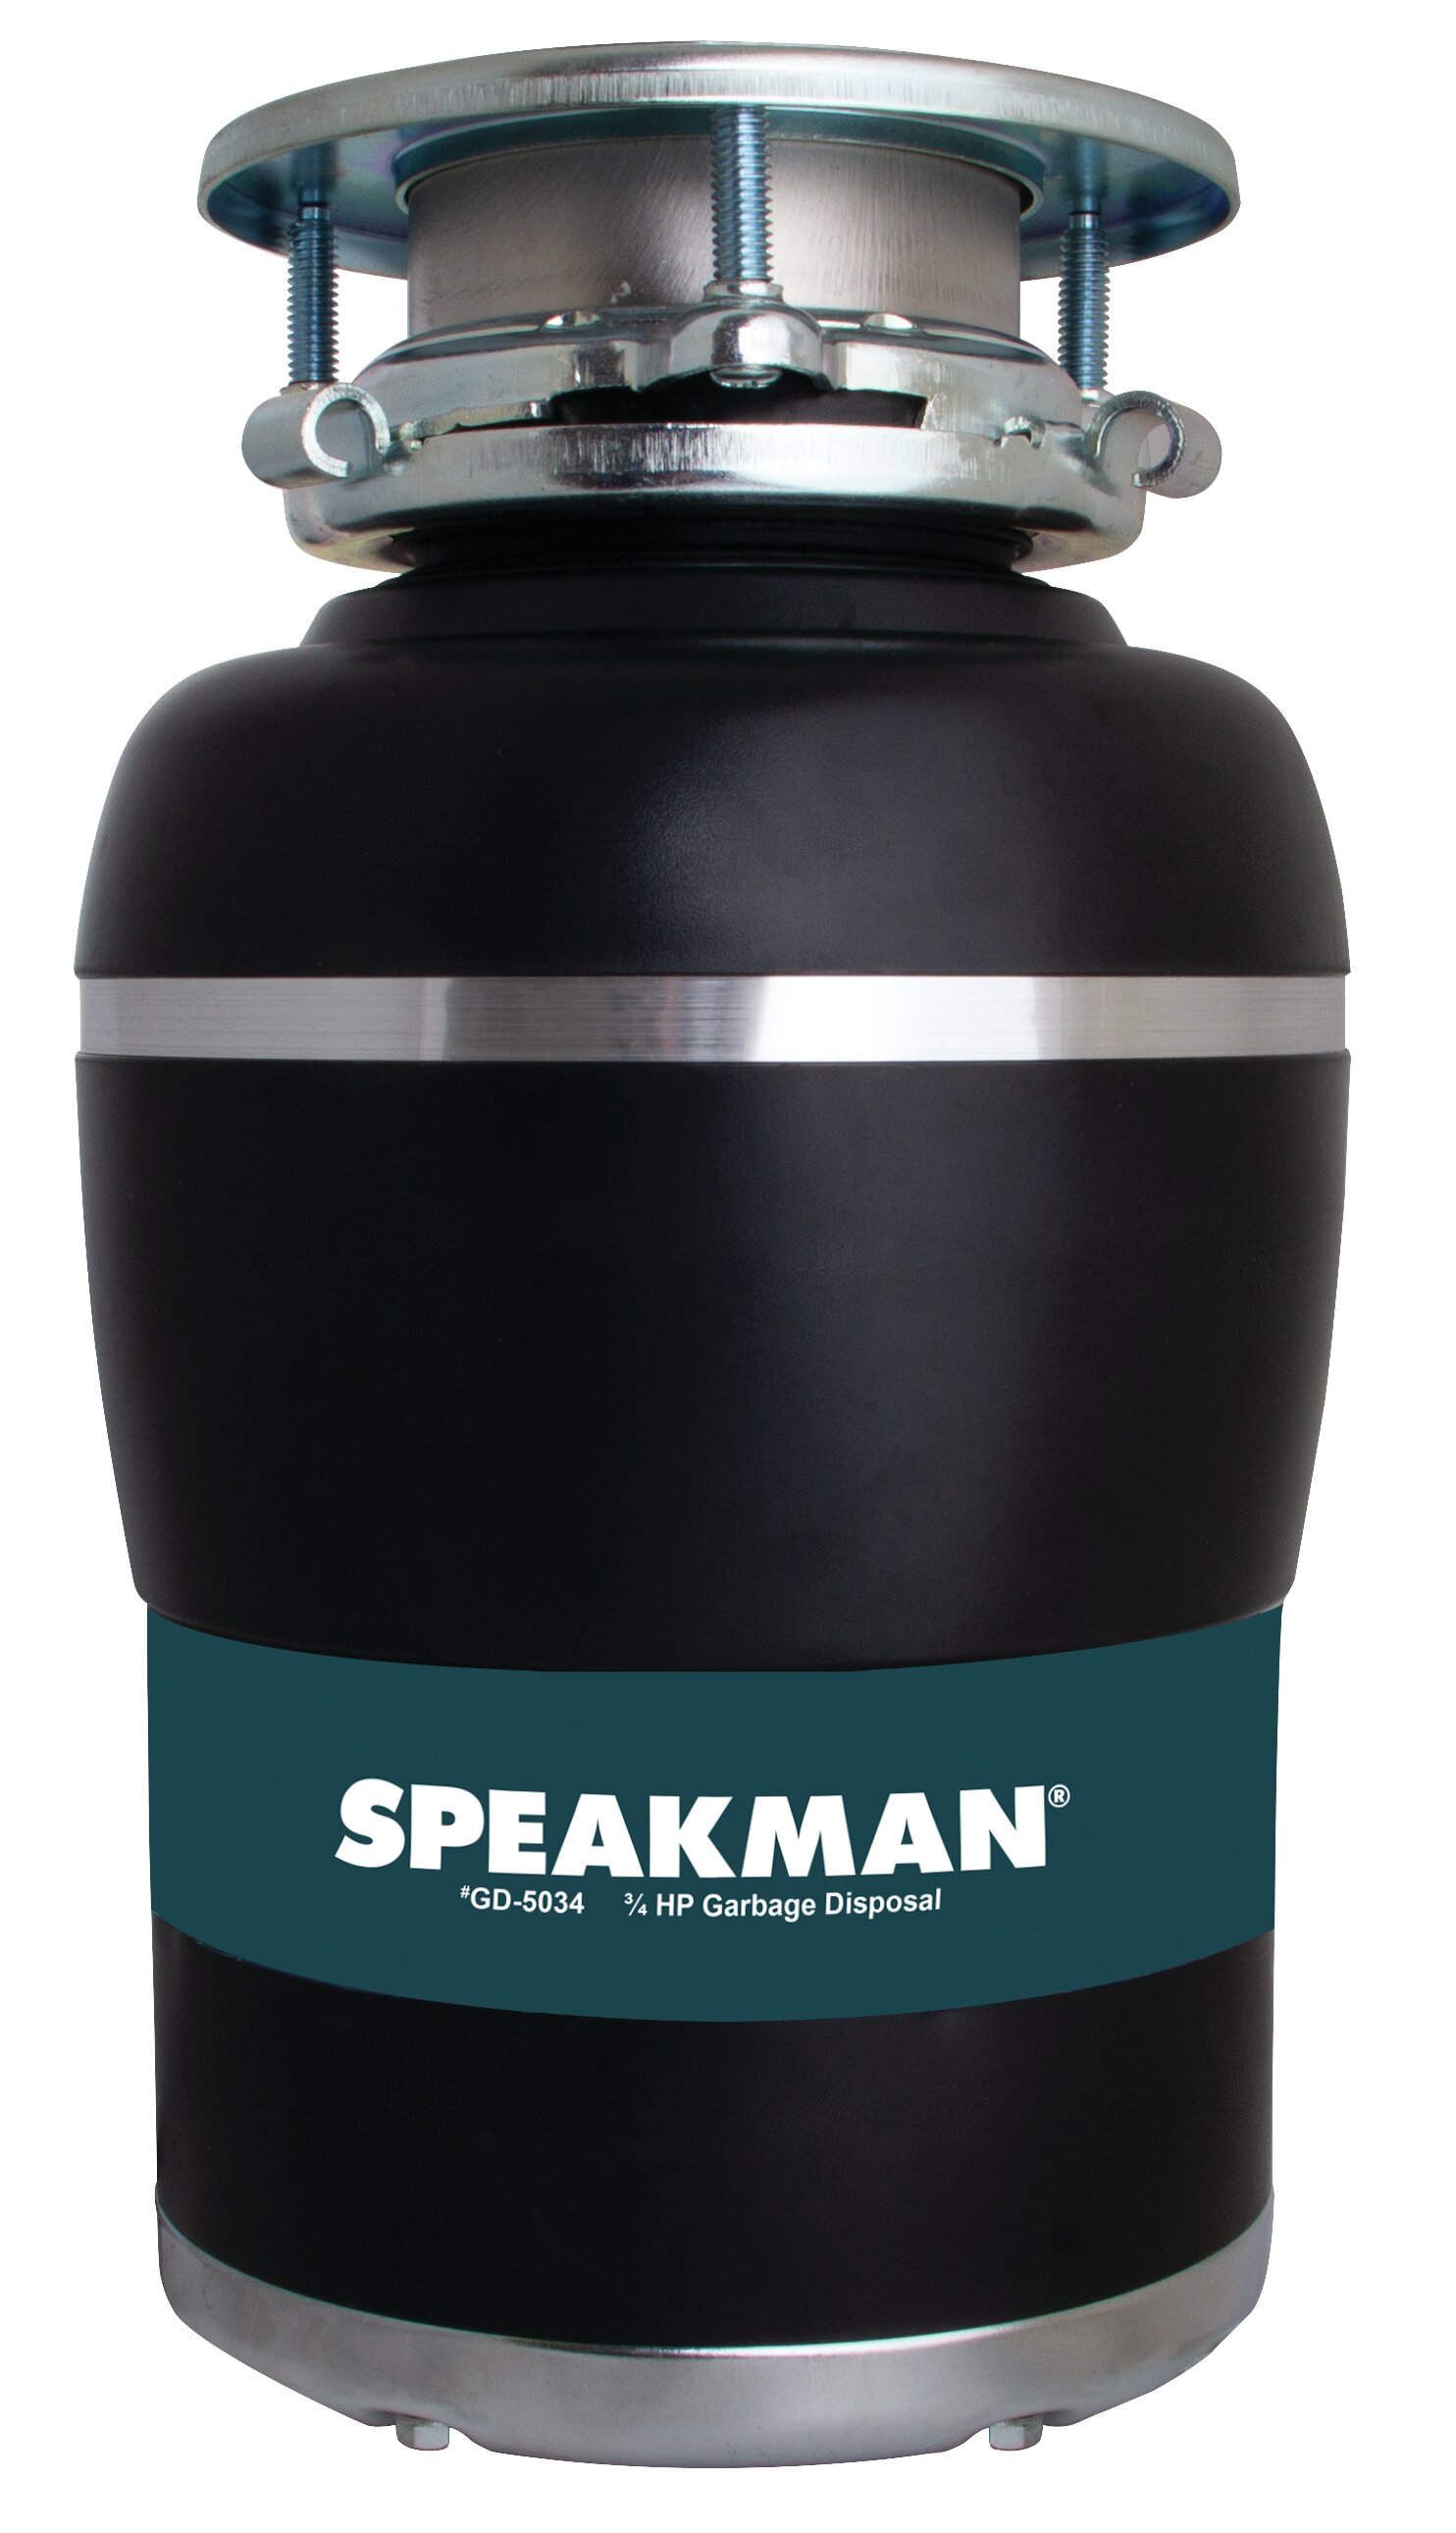 Speakman GD-5034 3/4 HP Garbage Disposal Wayfair